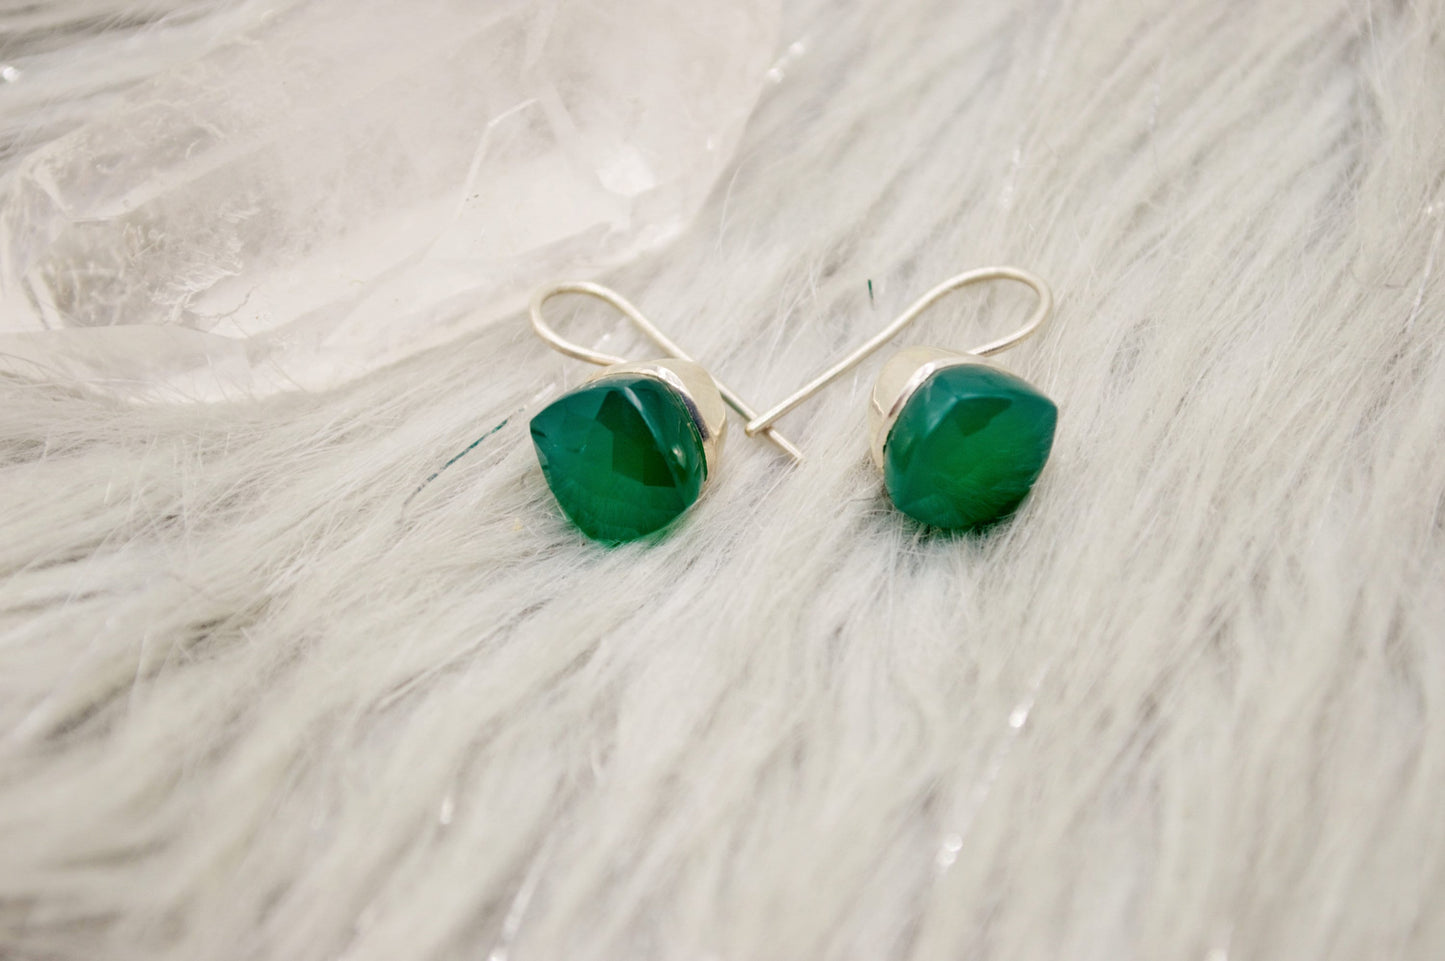 Green Onyx Earrings, Sterling Silver Gemstone Earrings, Dangle Drop Earrings, Handmade Earrings, Gifts For Her